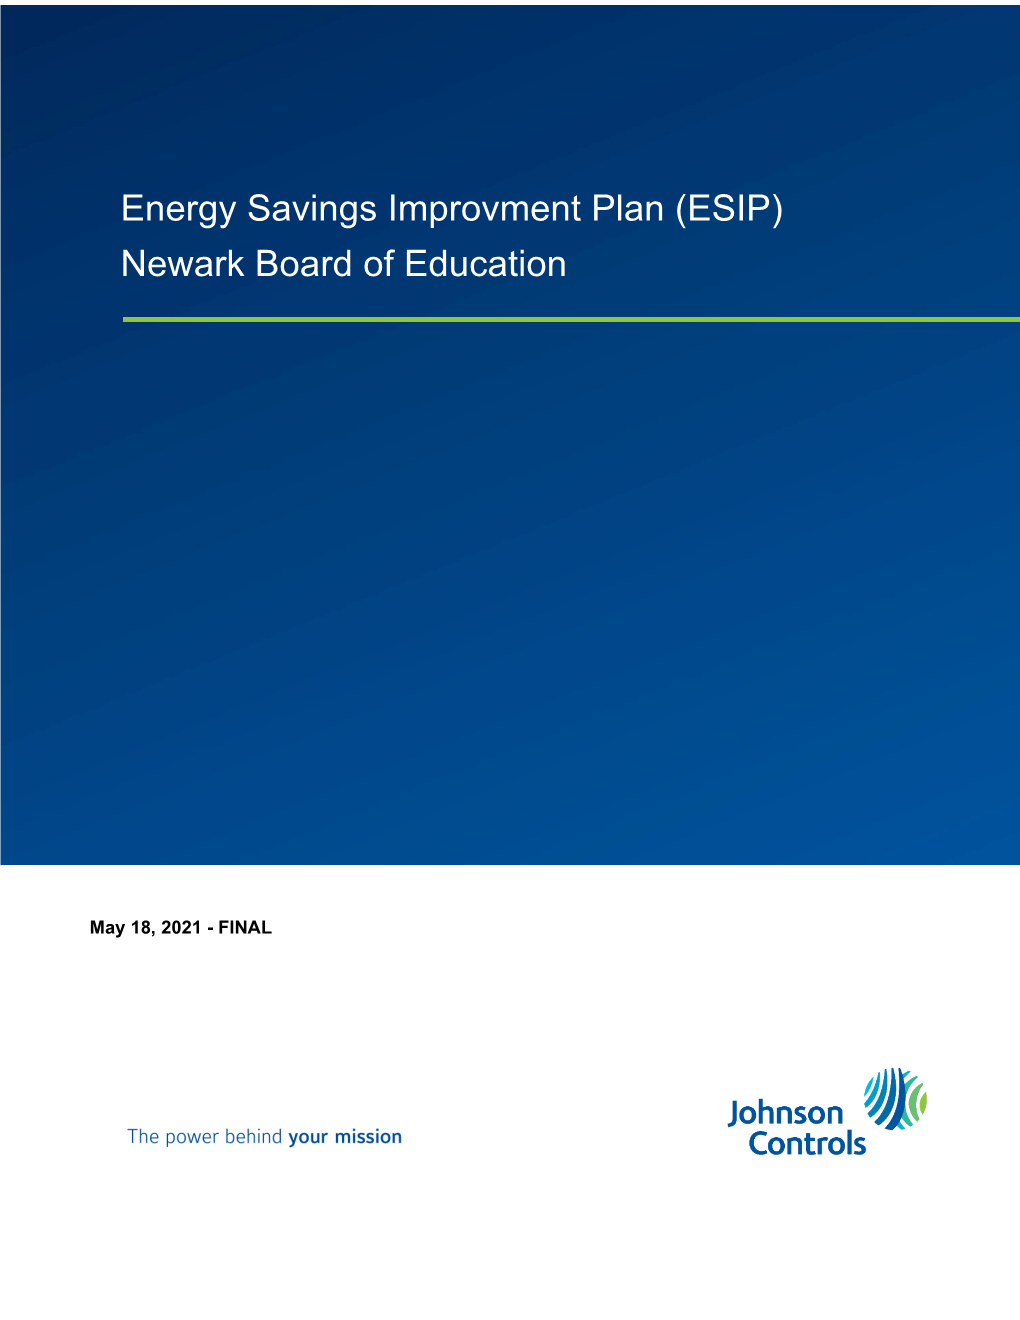 Energy Savings Improvment Plan (ESIP) Newark Board of Education